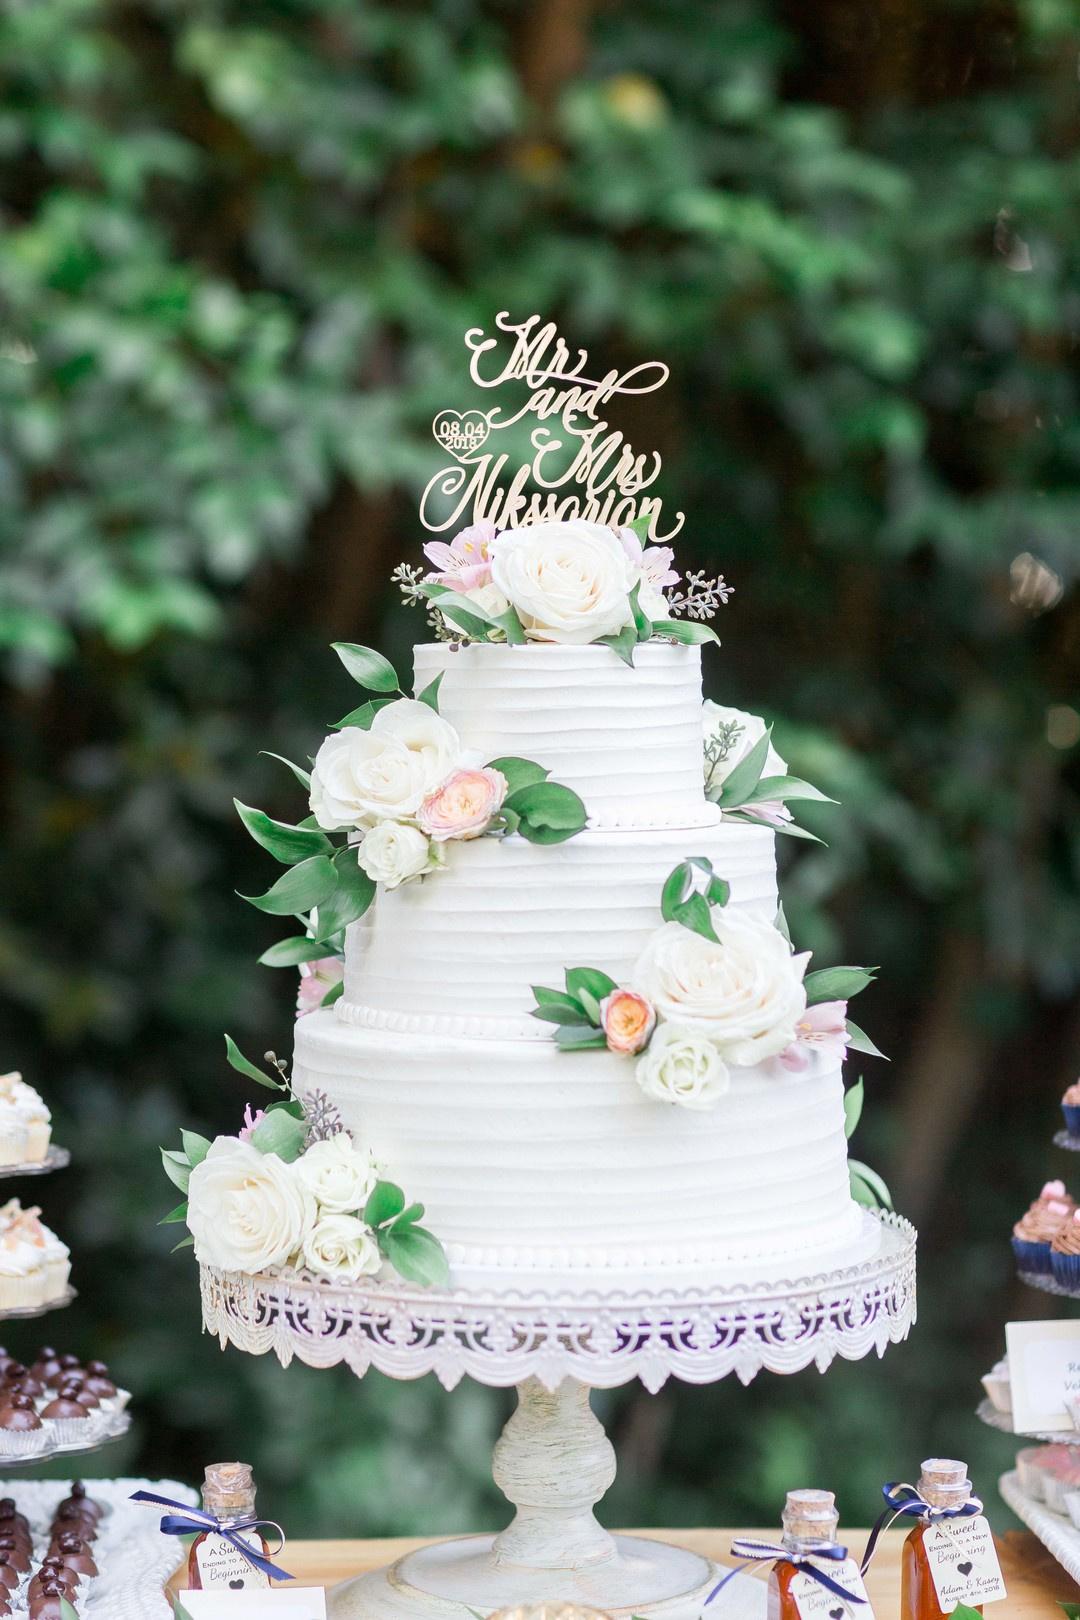 Amazing 3 tiered wedding cakes